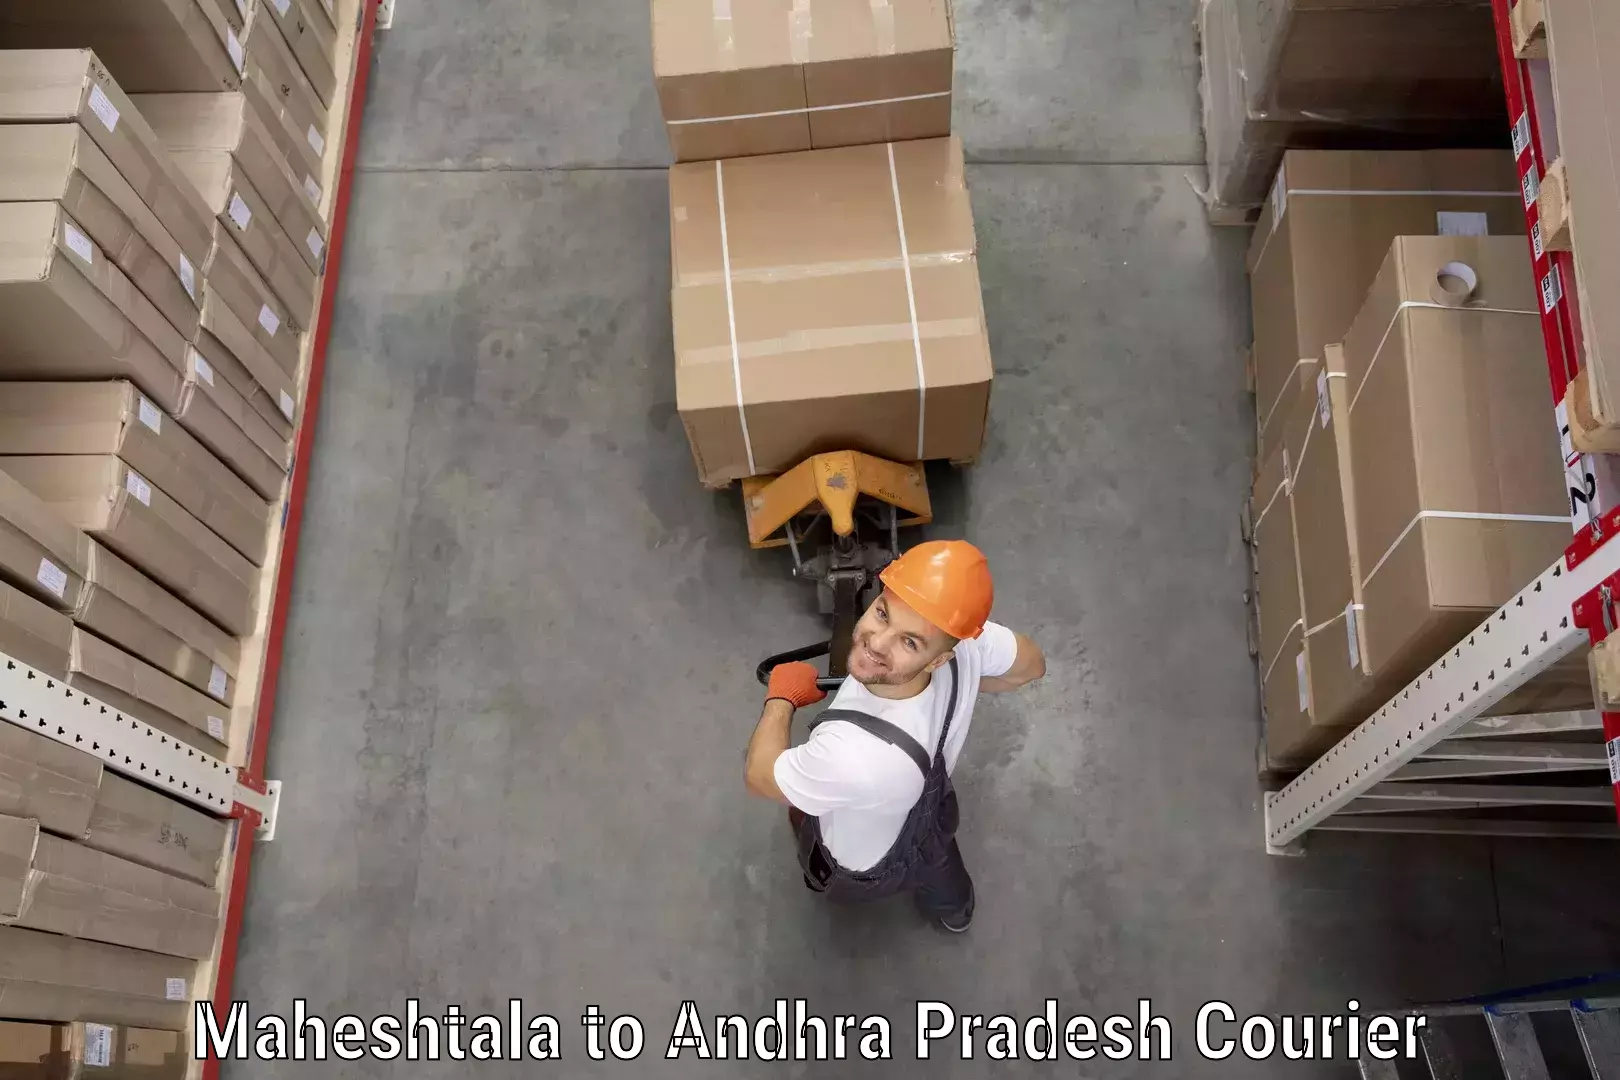 Express logistics providers Maheshtala to Challapalli